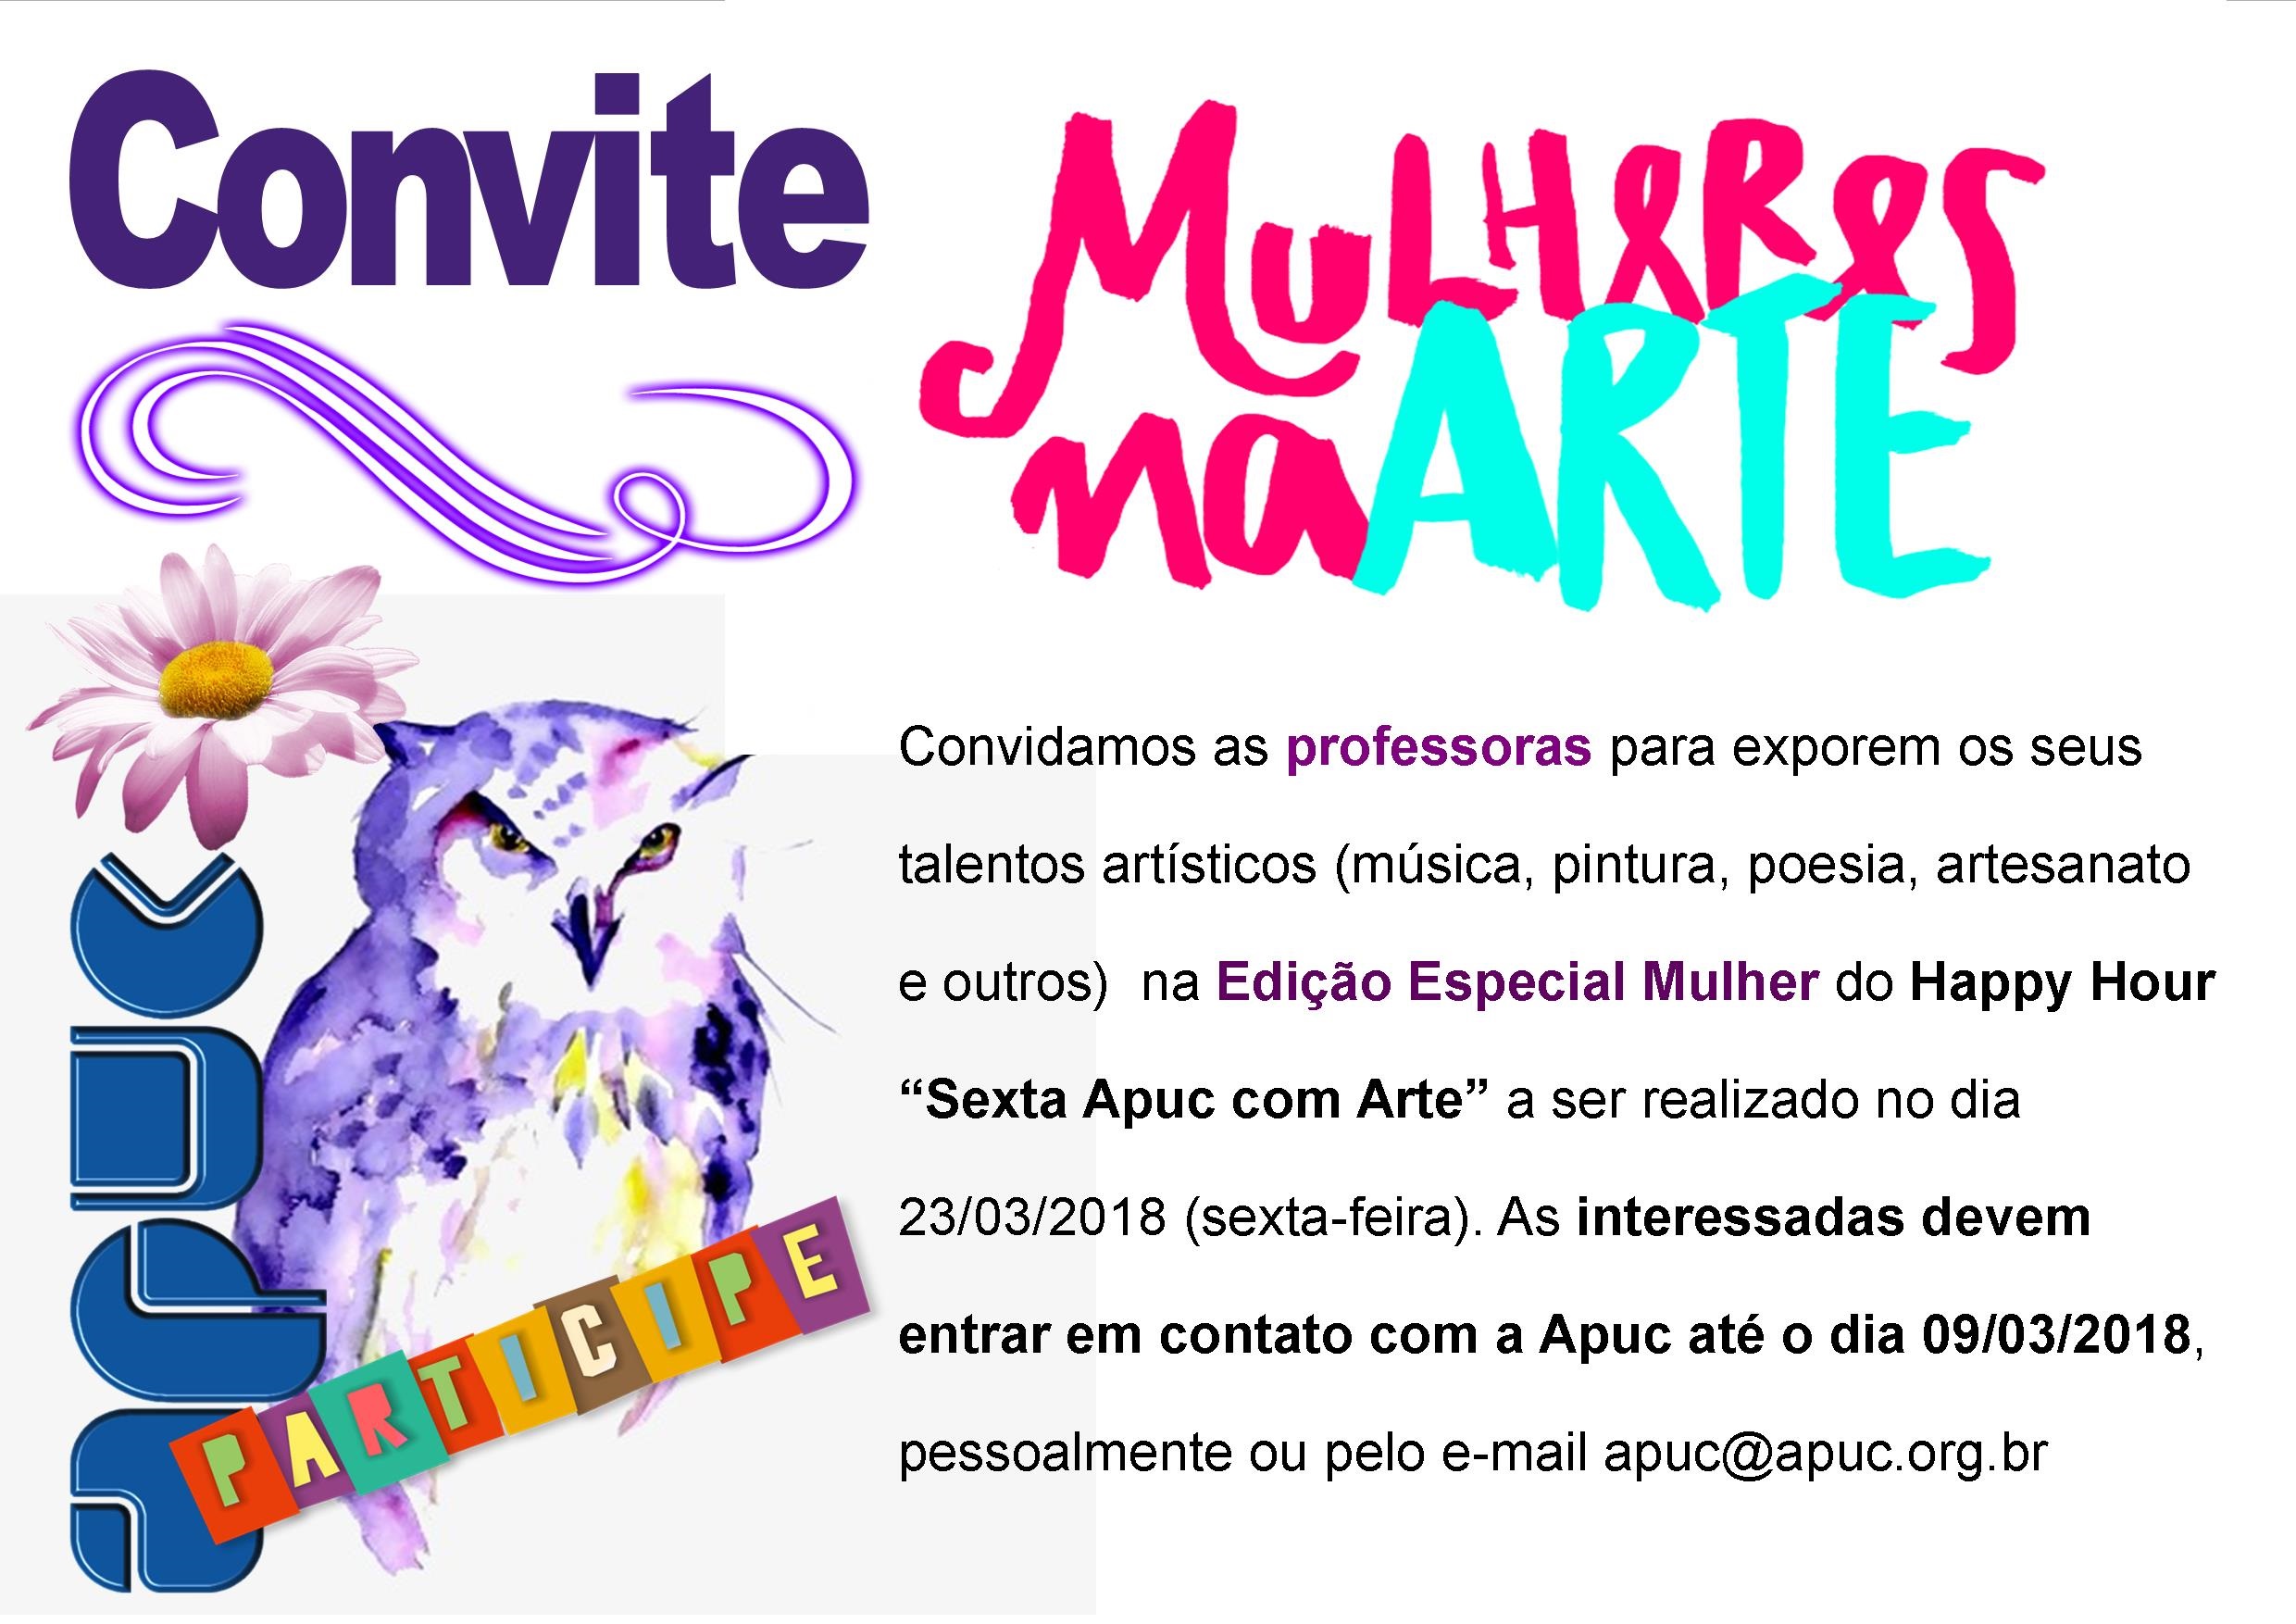 04.03.2018 Convite Mulheres nas Artes